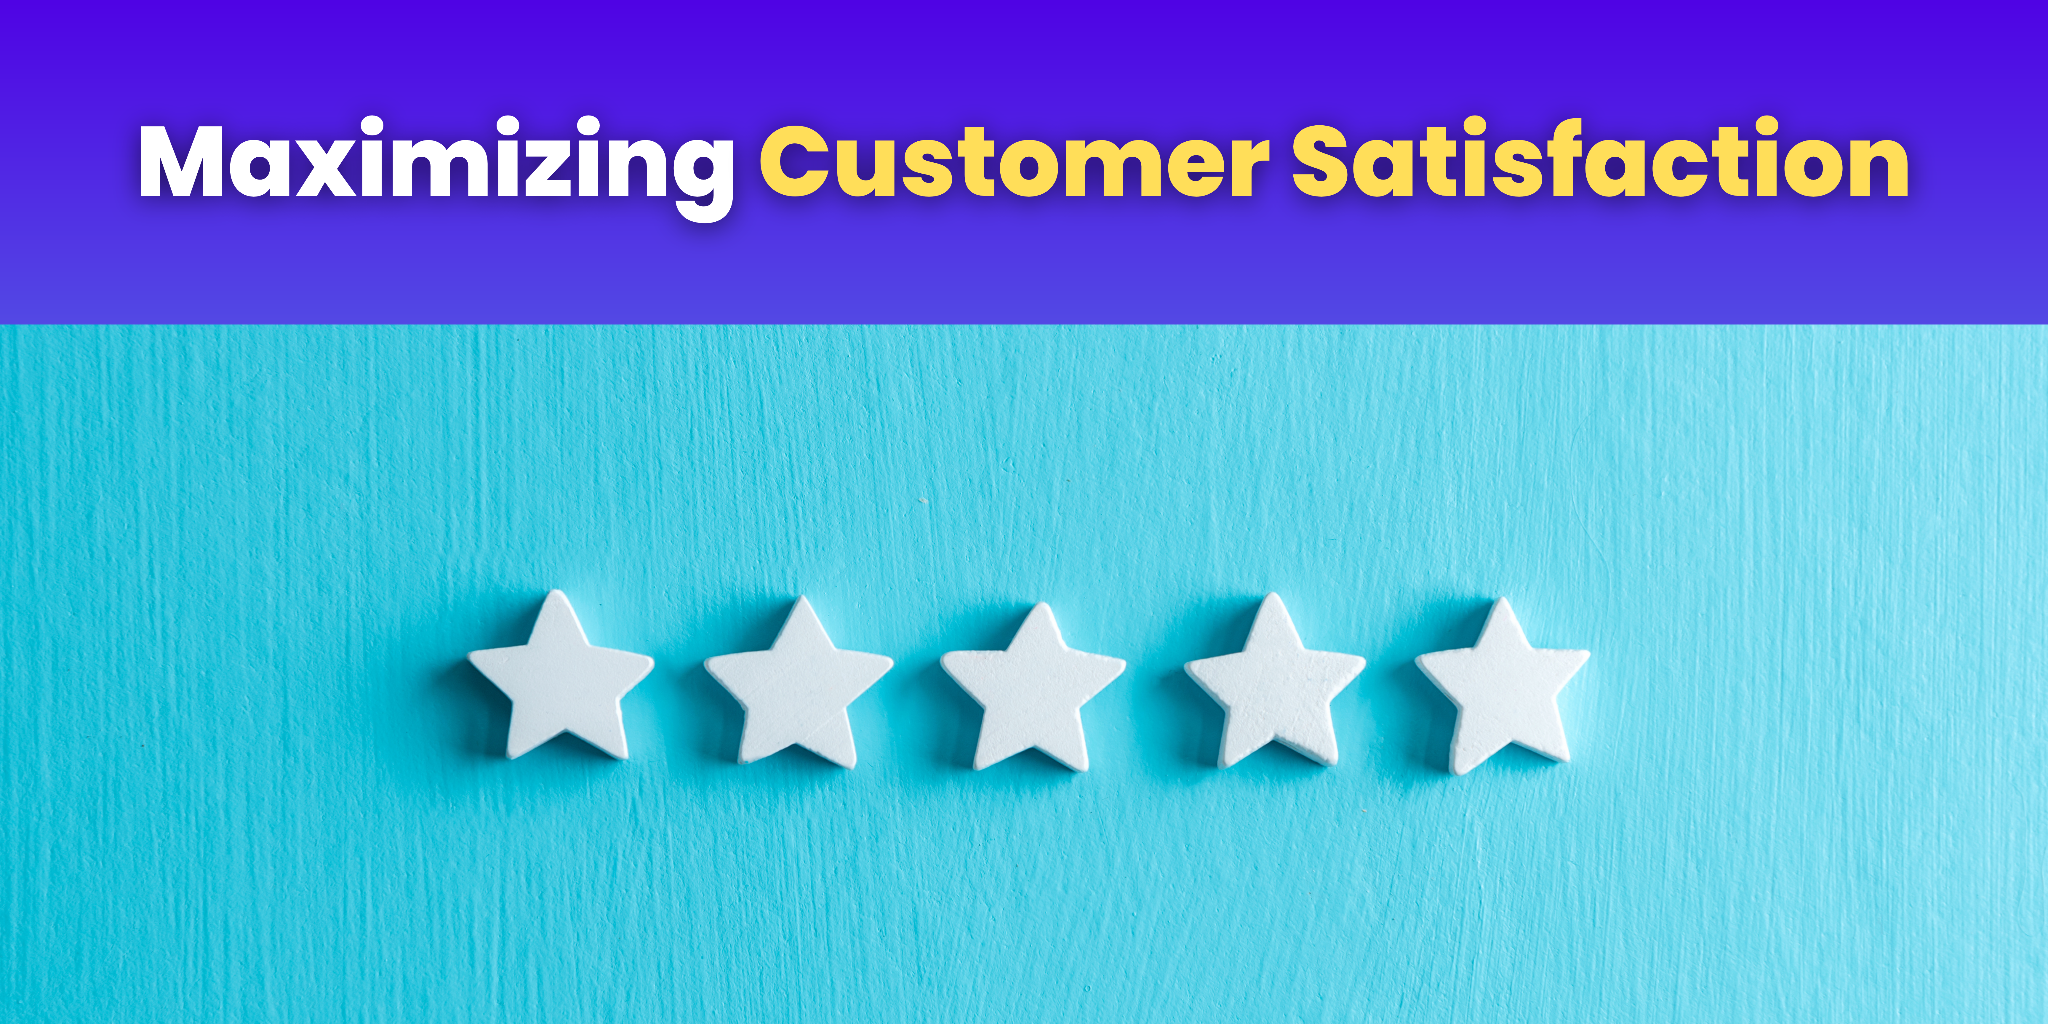 Maximizing Customer Satisfaction: 11 Key Benefits of Outsourcing Customer Service